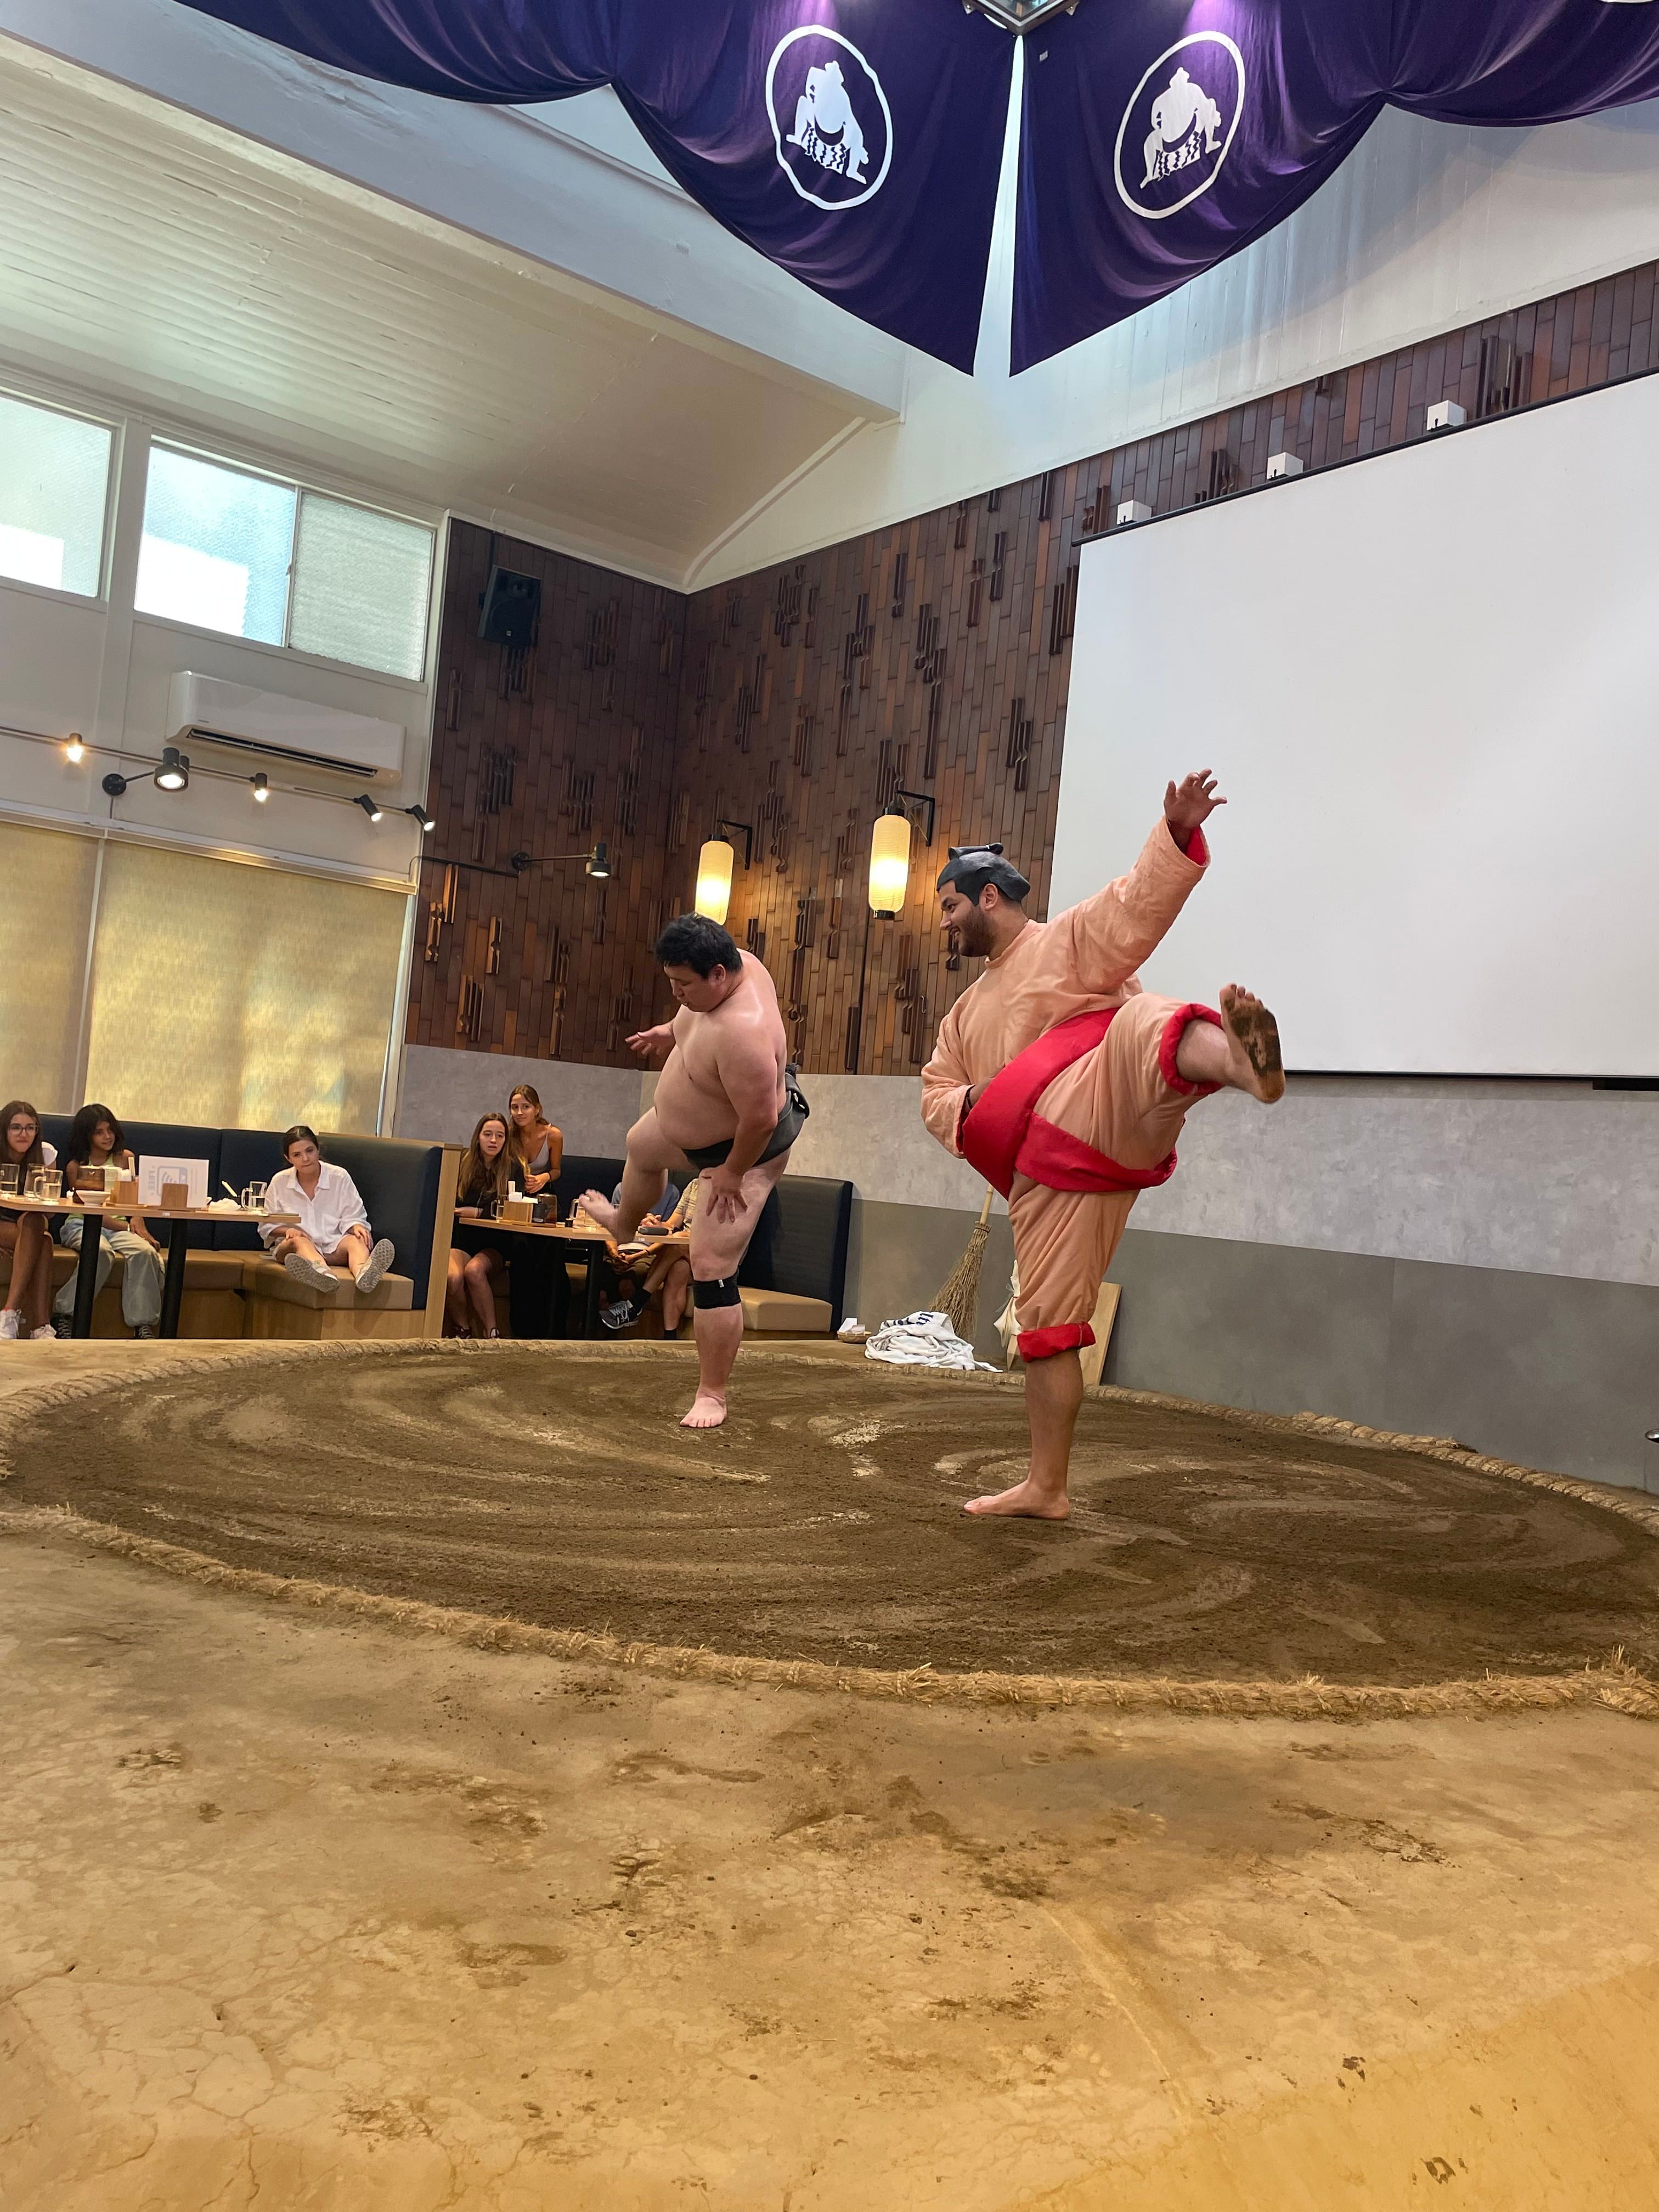 Challenge Sumo Wrestlers and Enjoy Dinner